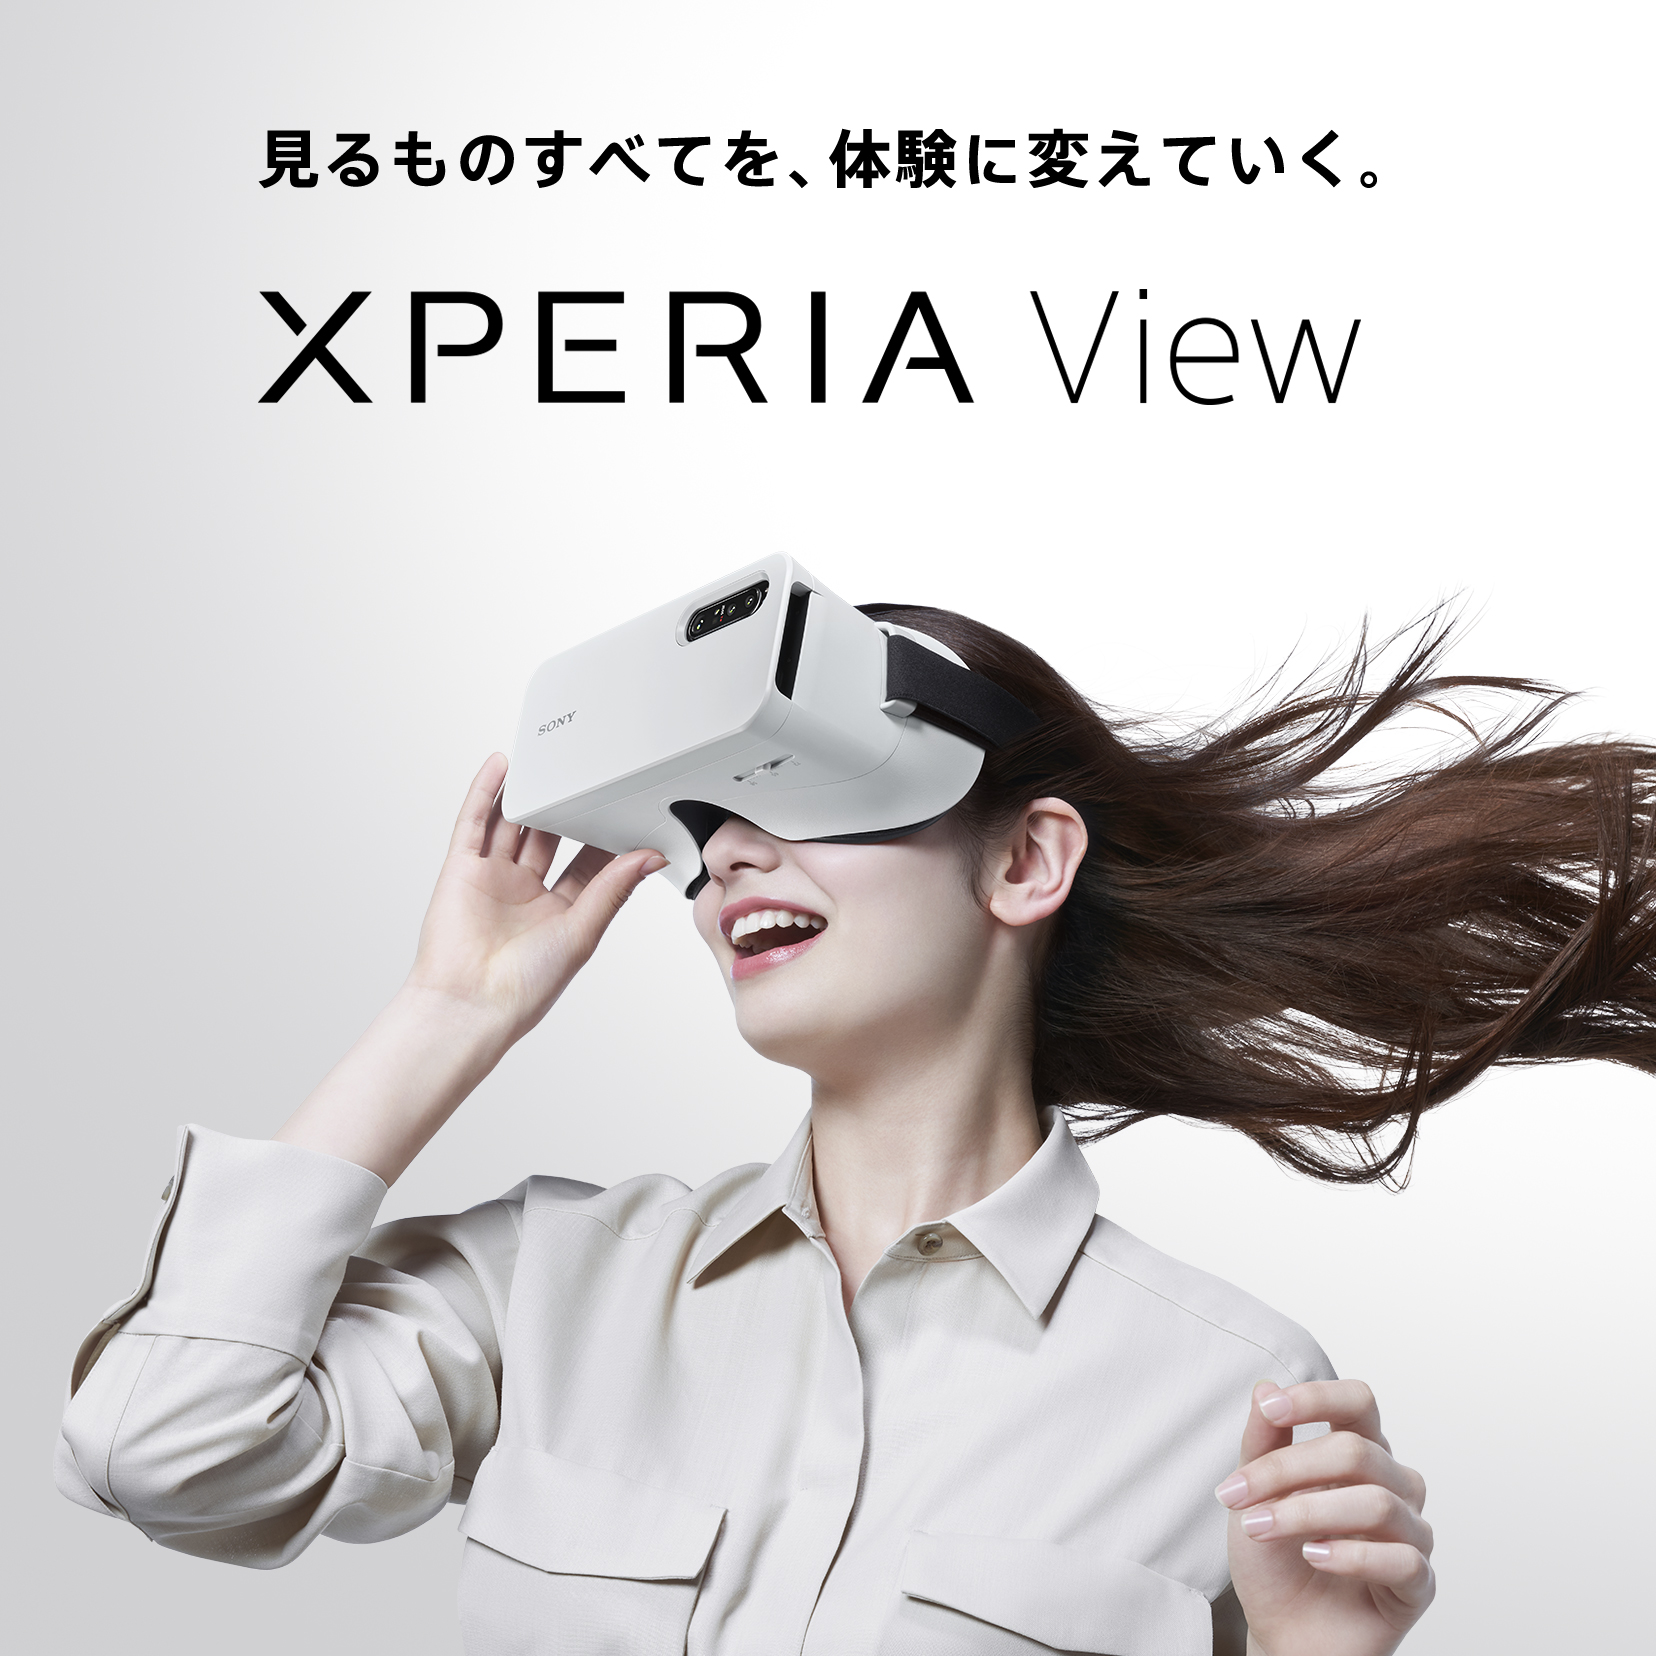 Xperia View ビジュアルヘッドセット